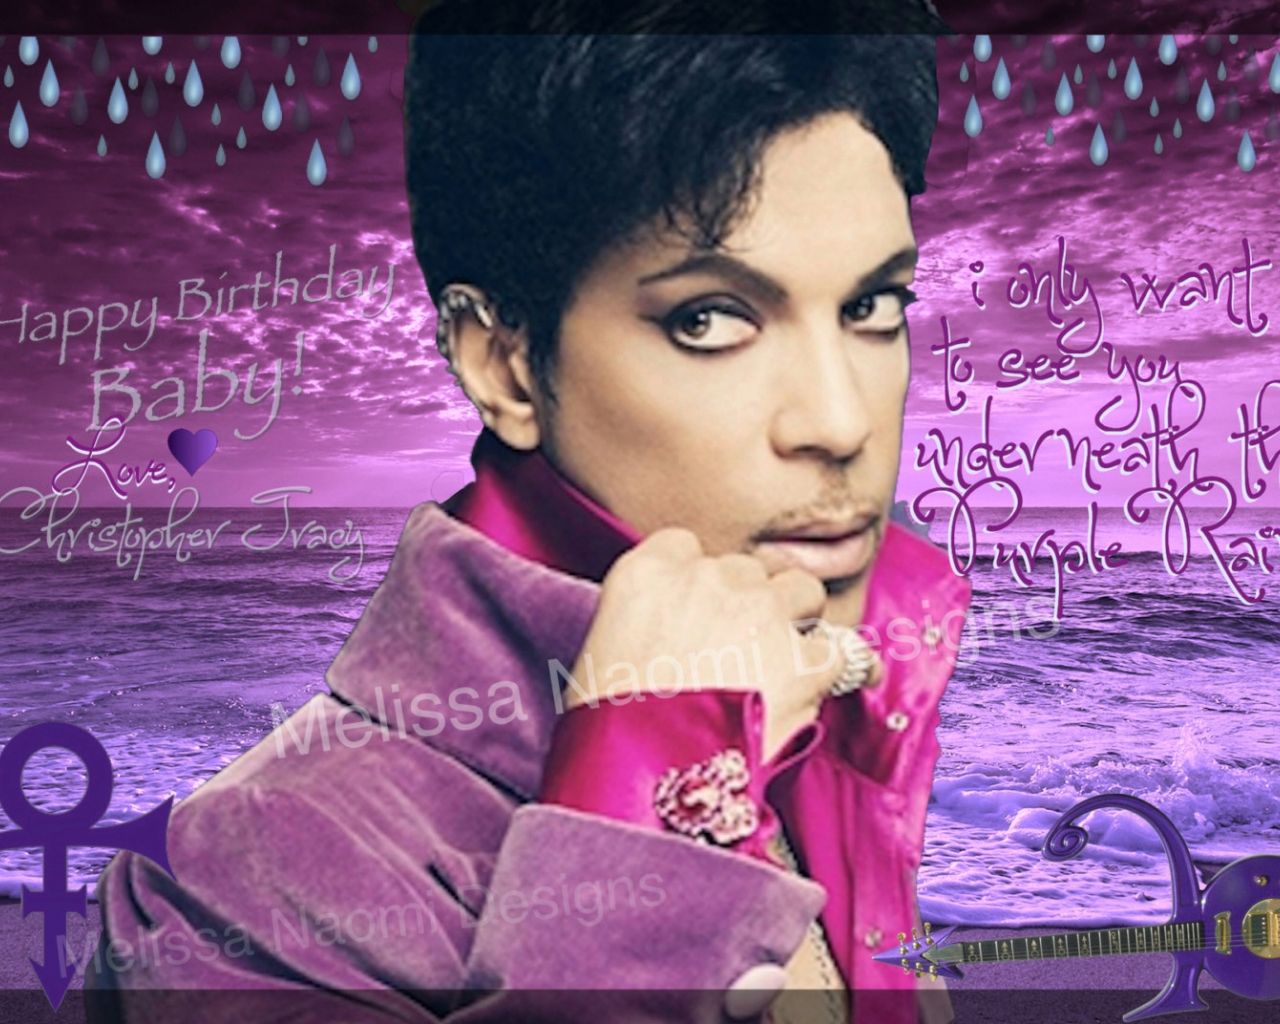 Prince Singer Wallpaper